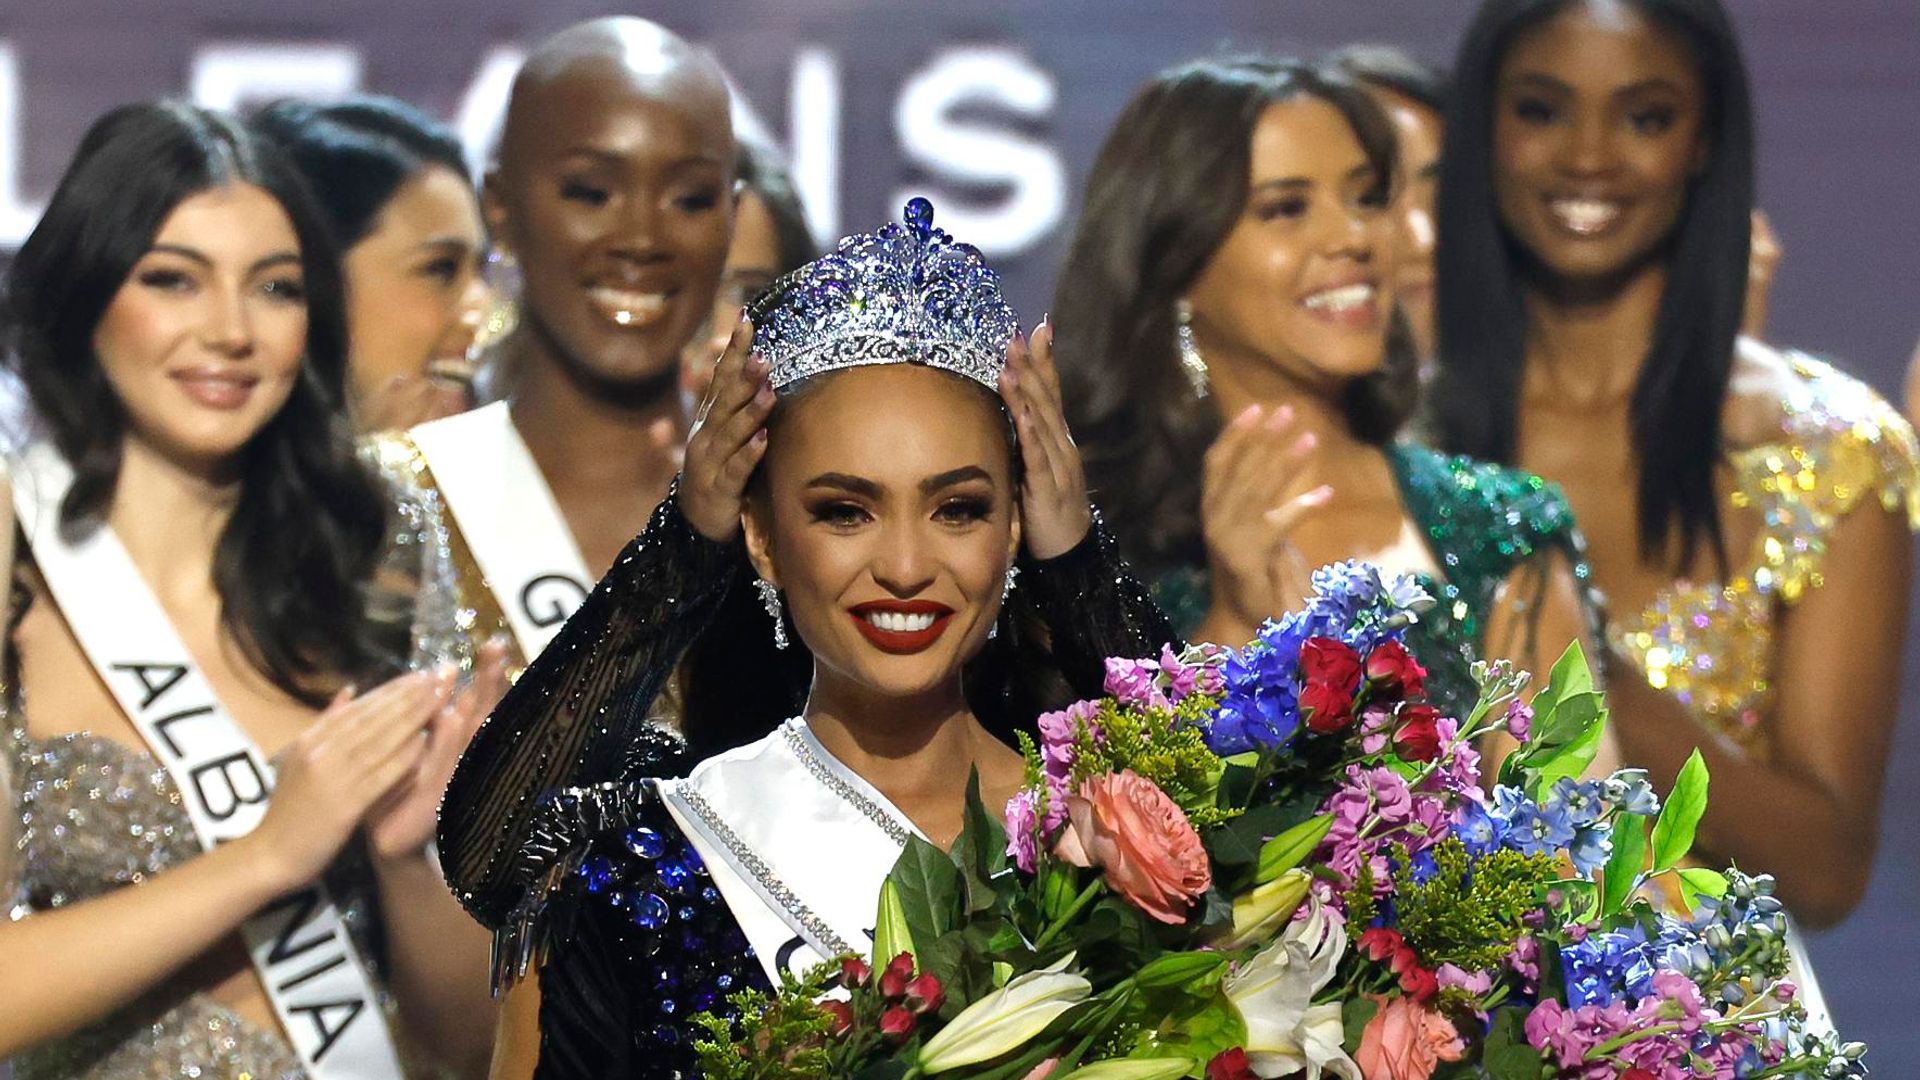 Empresa propietaria de Miss Universe se declara en quiebra: ¿cuál es el futuro del certamen?